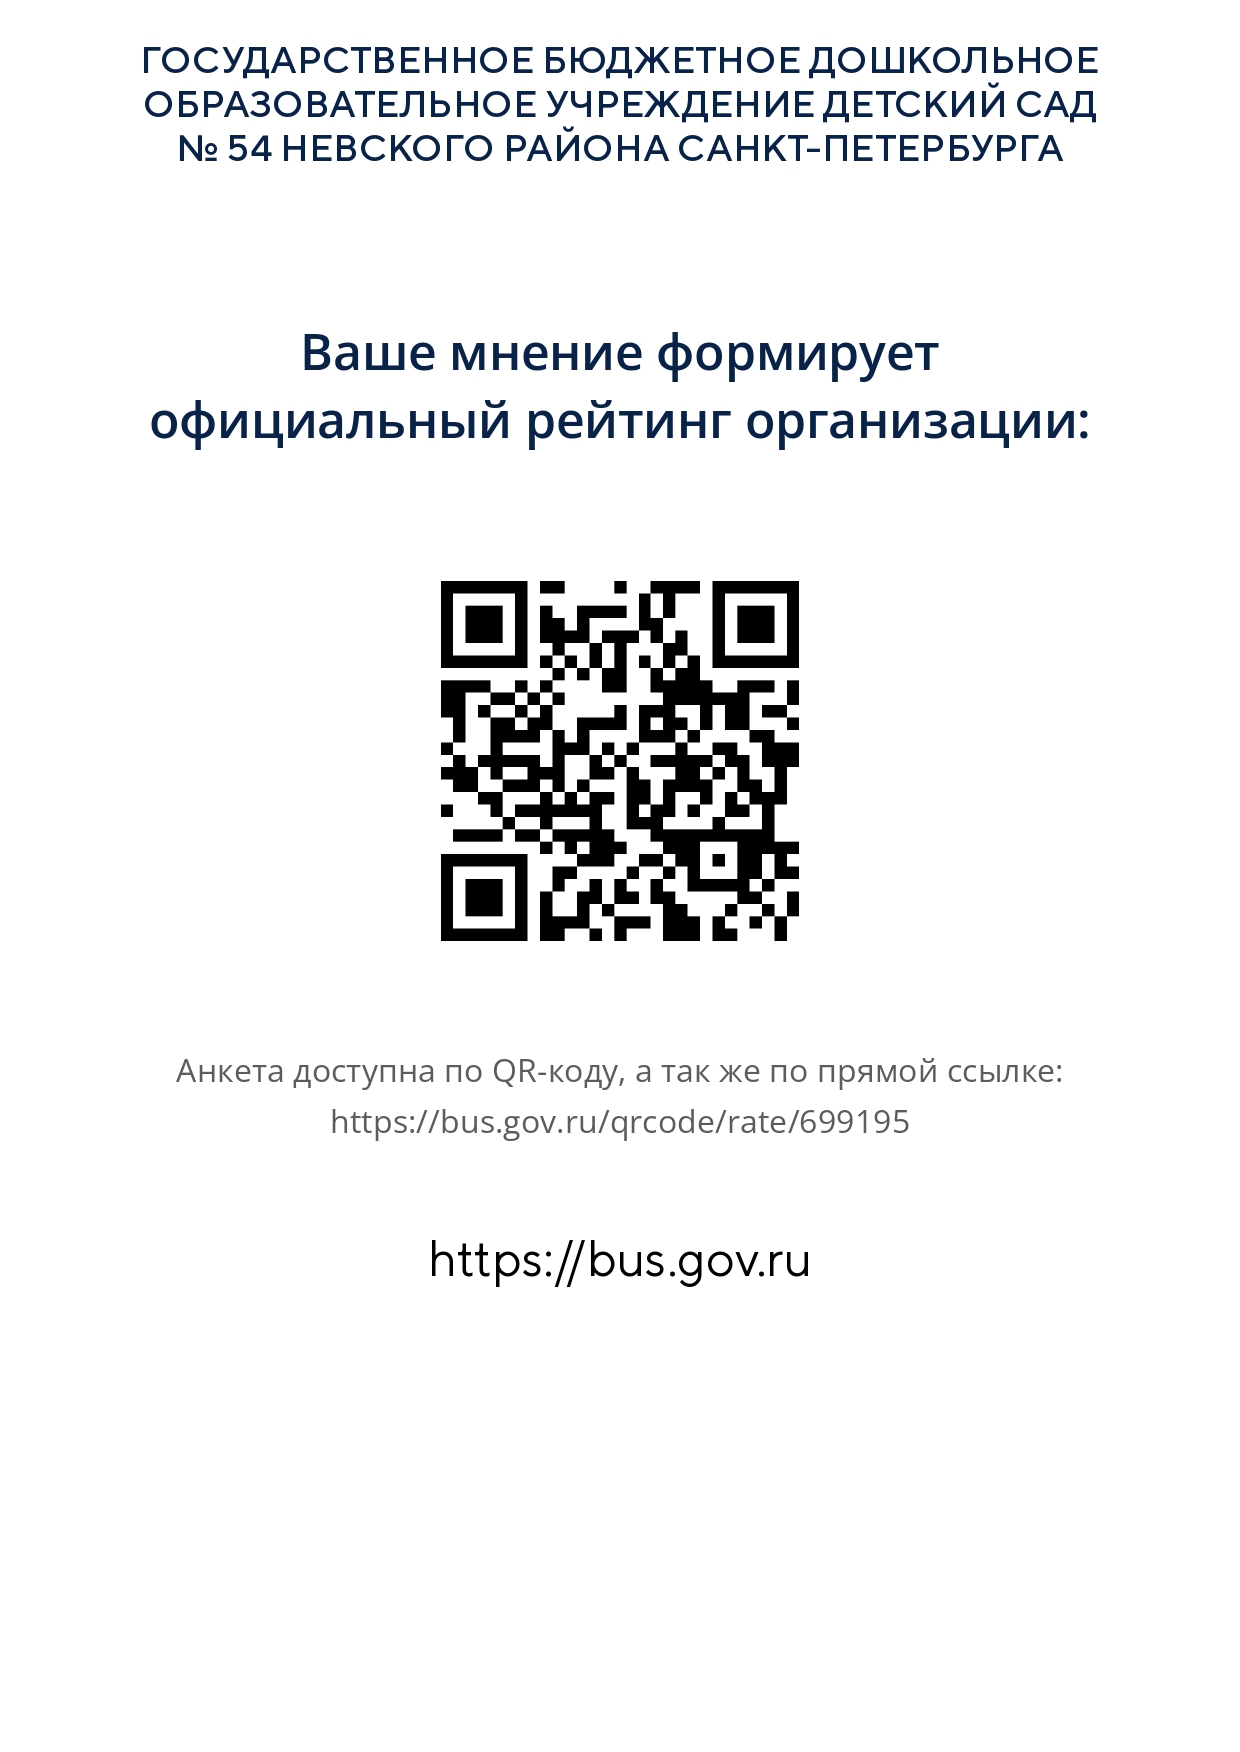 gisgmu.cert.roskazna.ru private qr code show page 0001